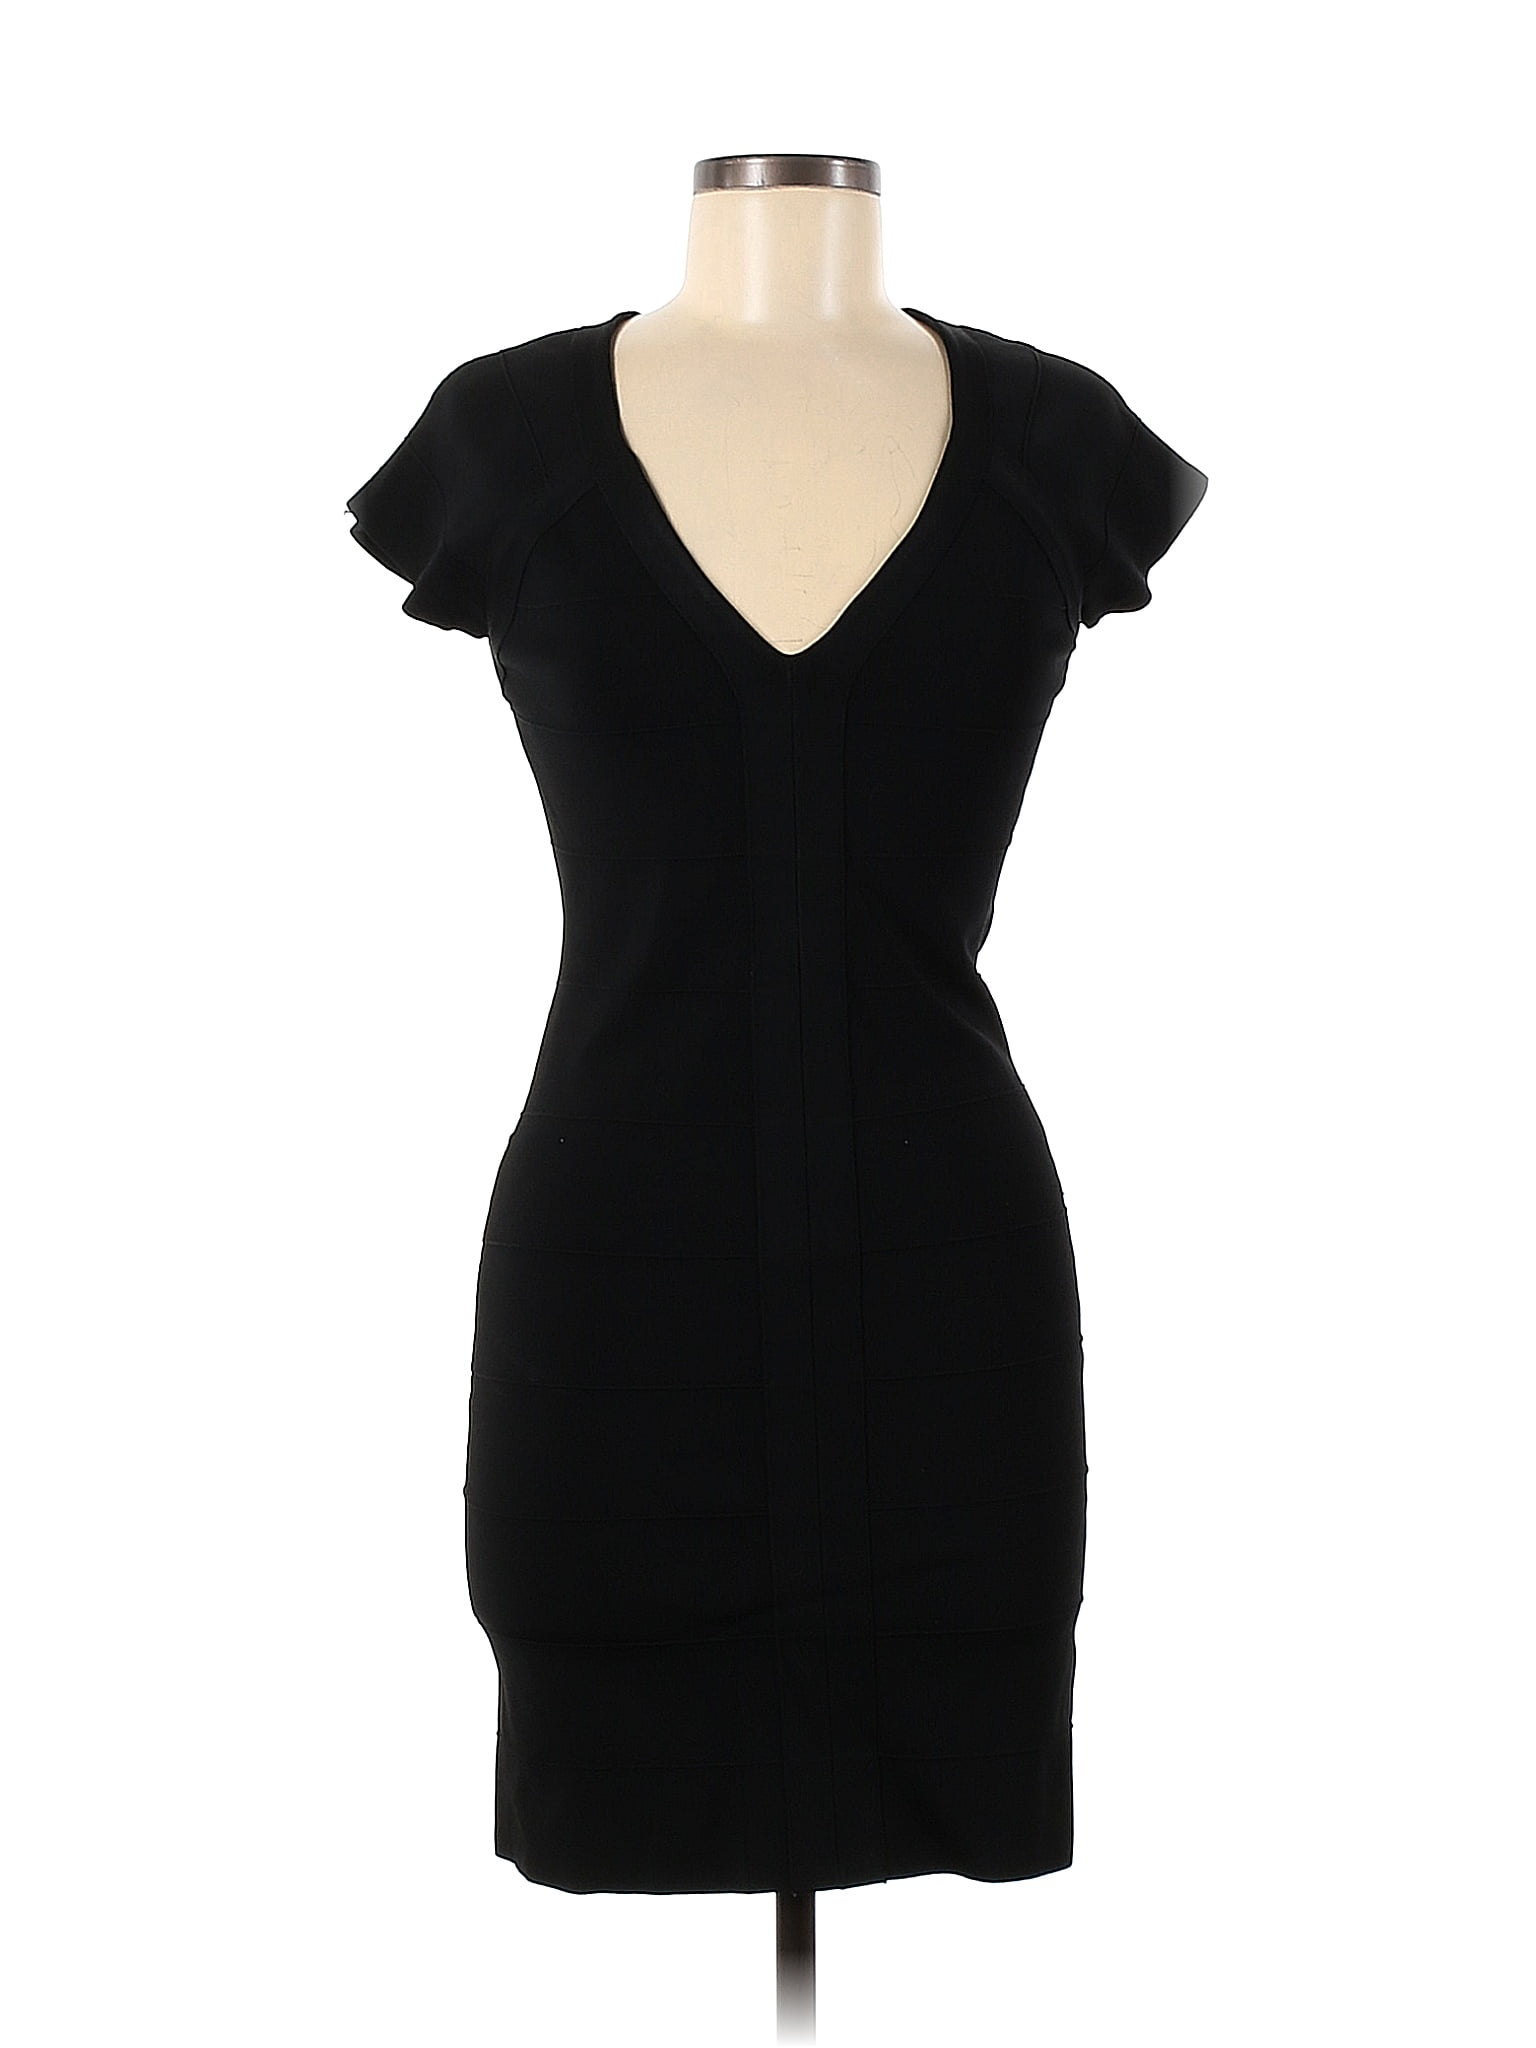 Express Design Studio Solid Black Casual Dress Size M - 76% off | thredUP